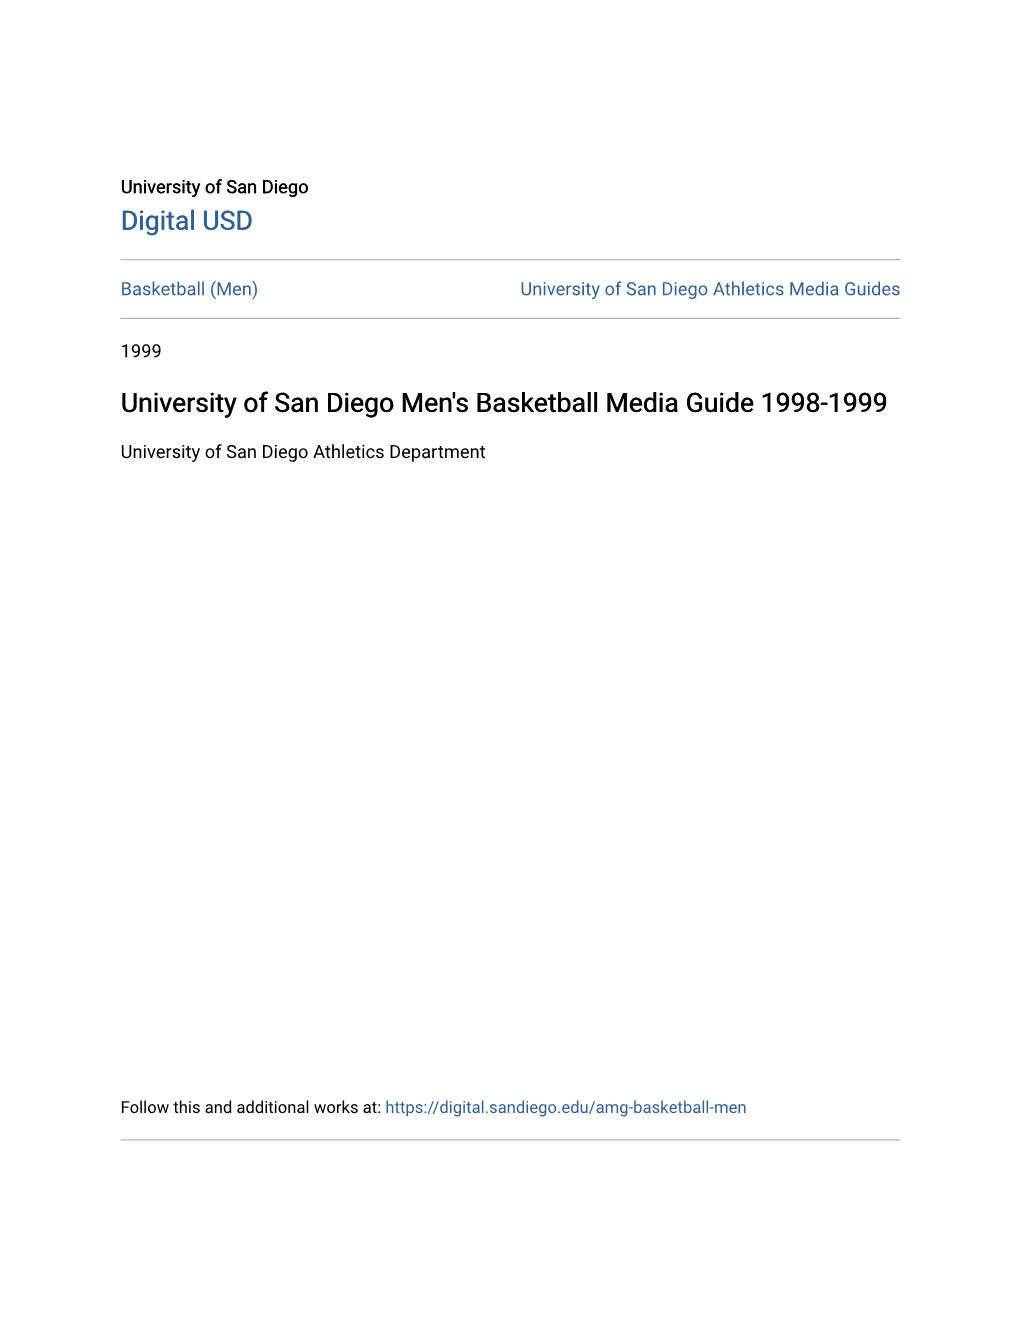 University of San Diego Men's Basketball Media Guide 1998-1999